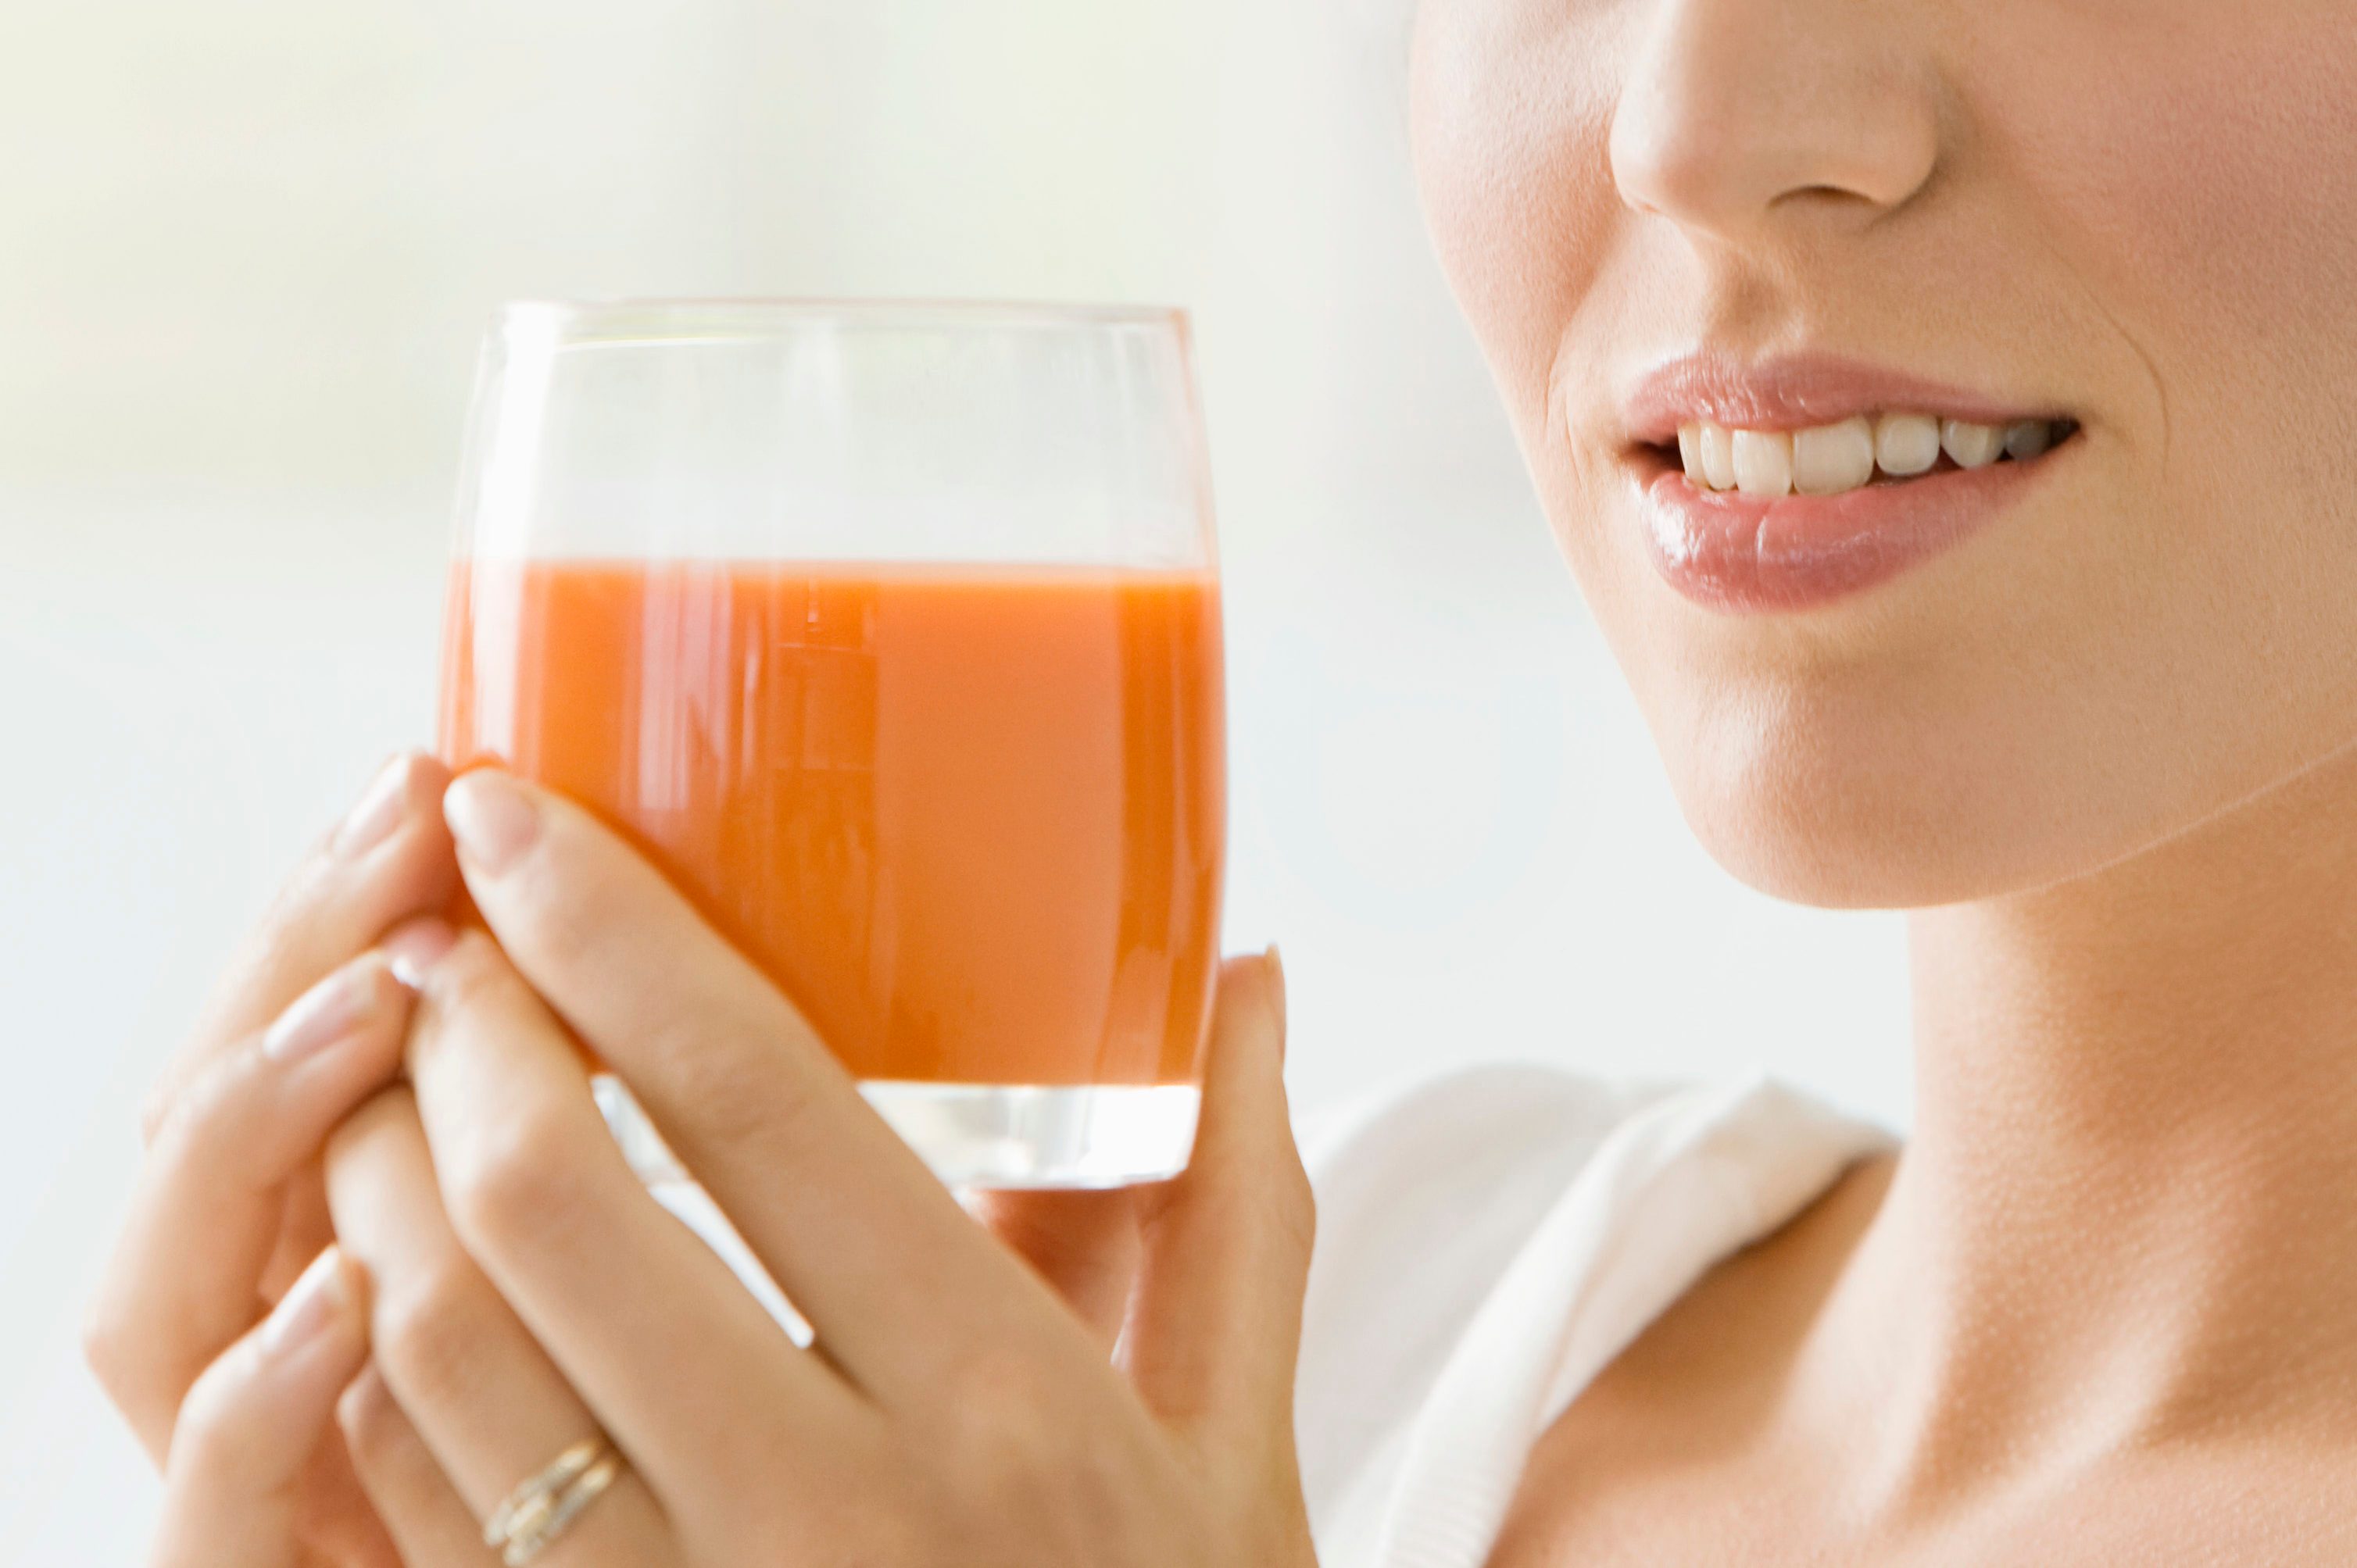 Woman holding a glass of tomato soup